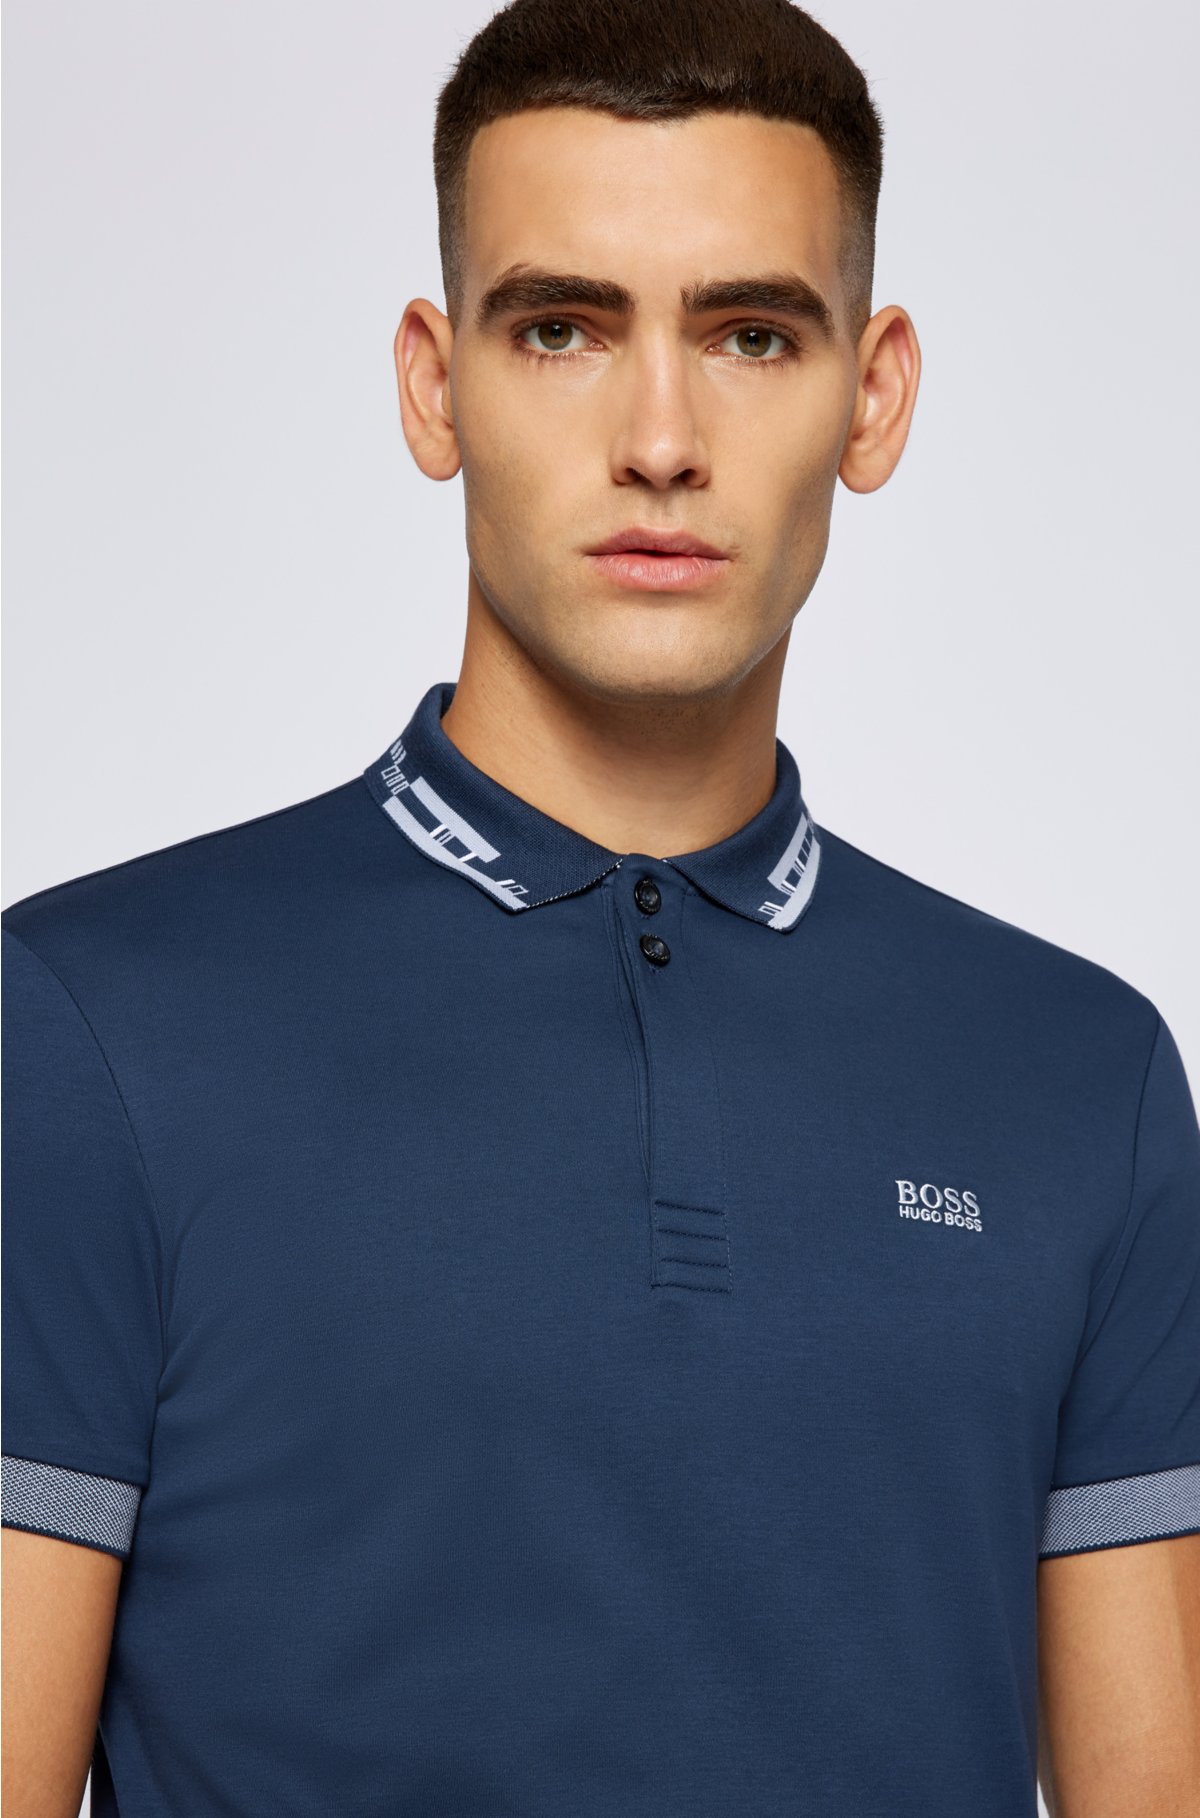 log fænomen Også BOSS - Regular-fit polo shirt in cotton with patterned collar